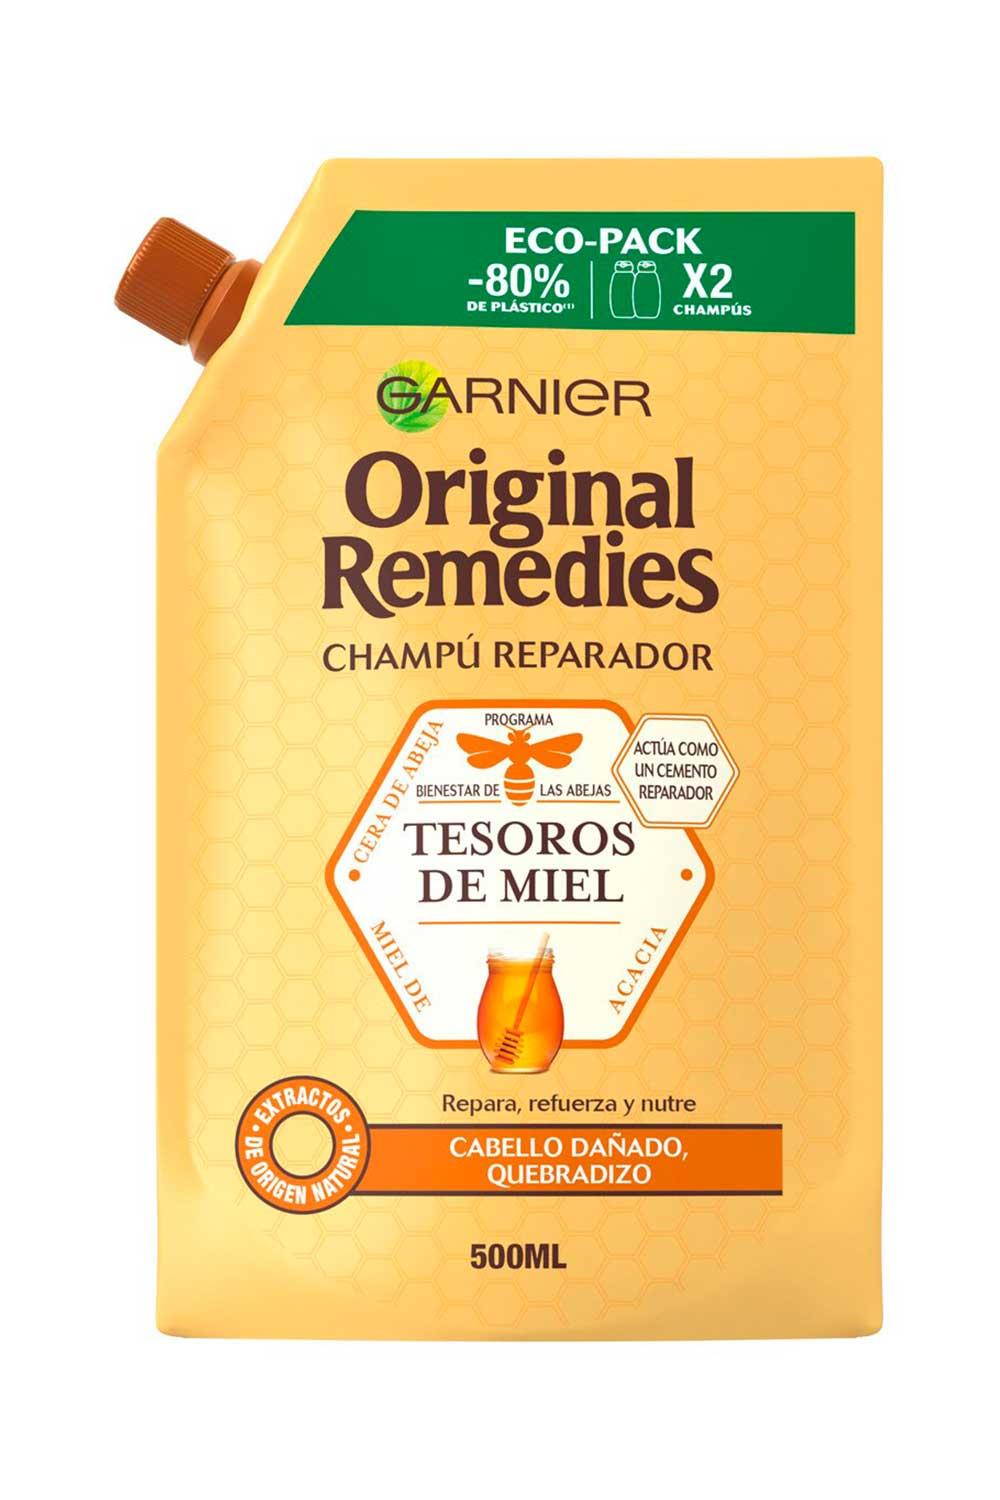  Champú reparador eco-pack Tesoros de miel Original Remedies Garnier